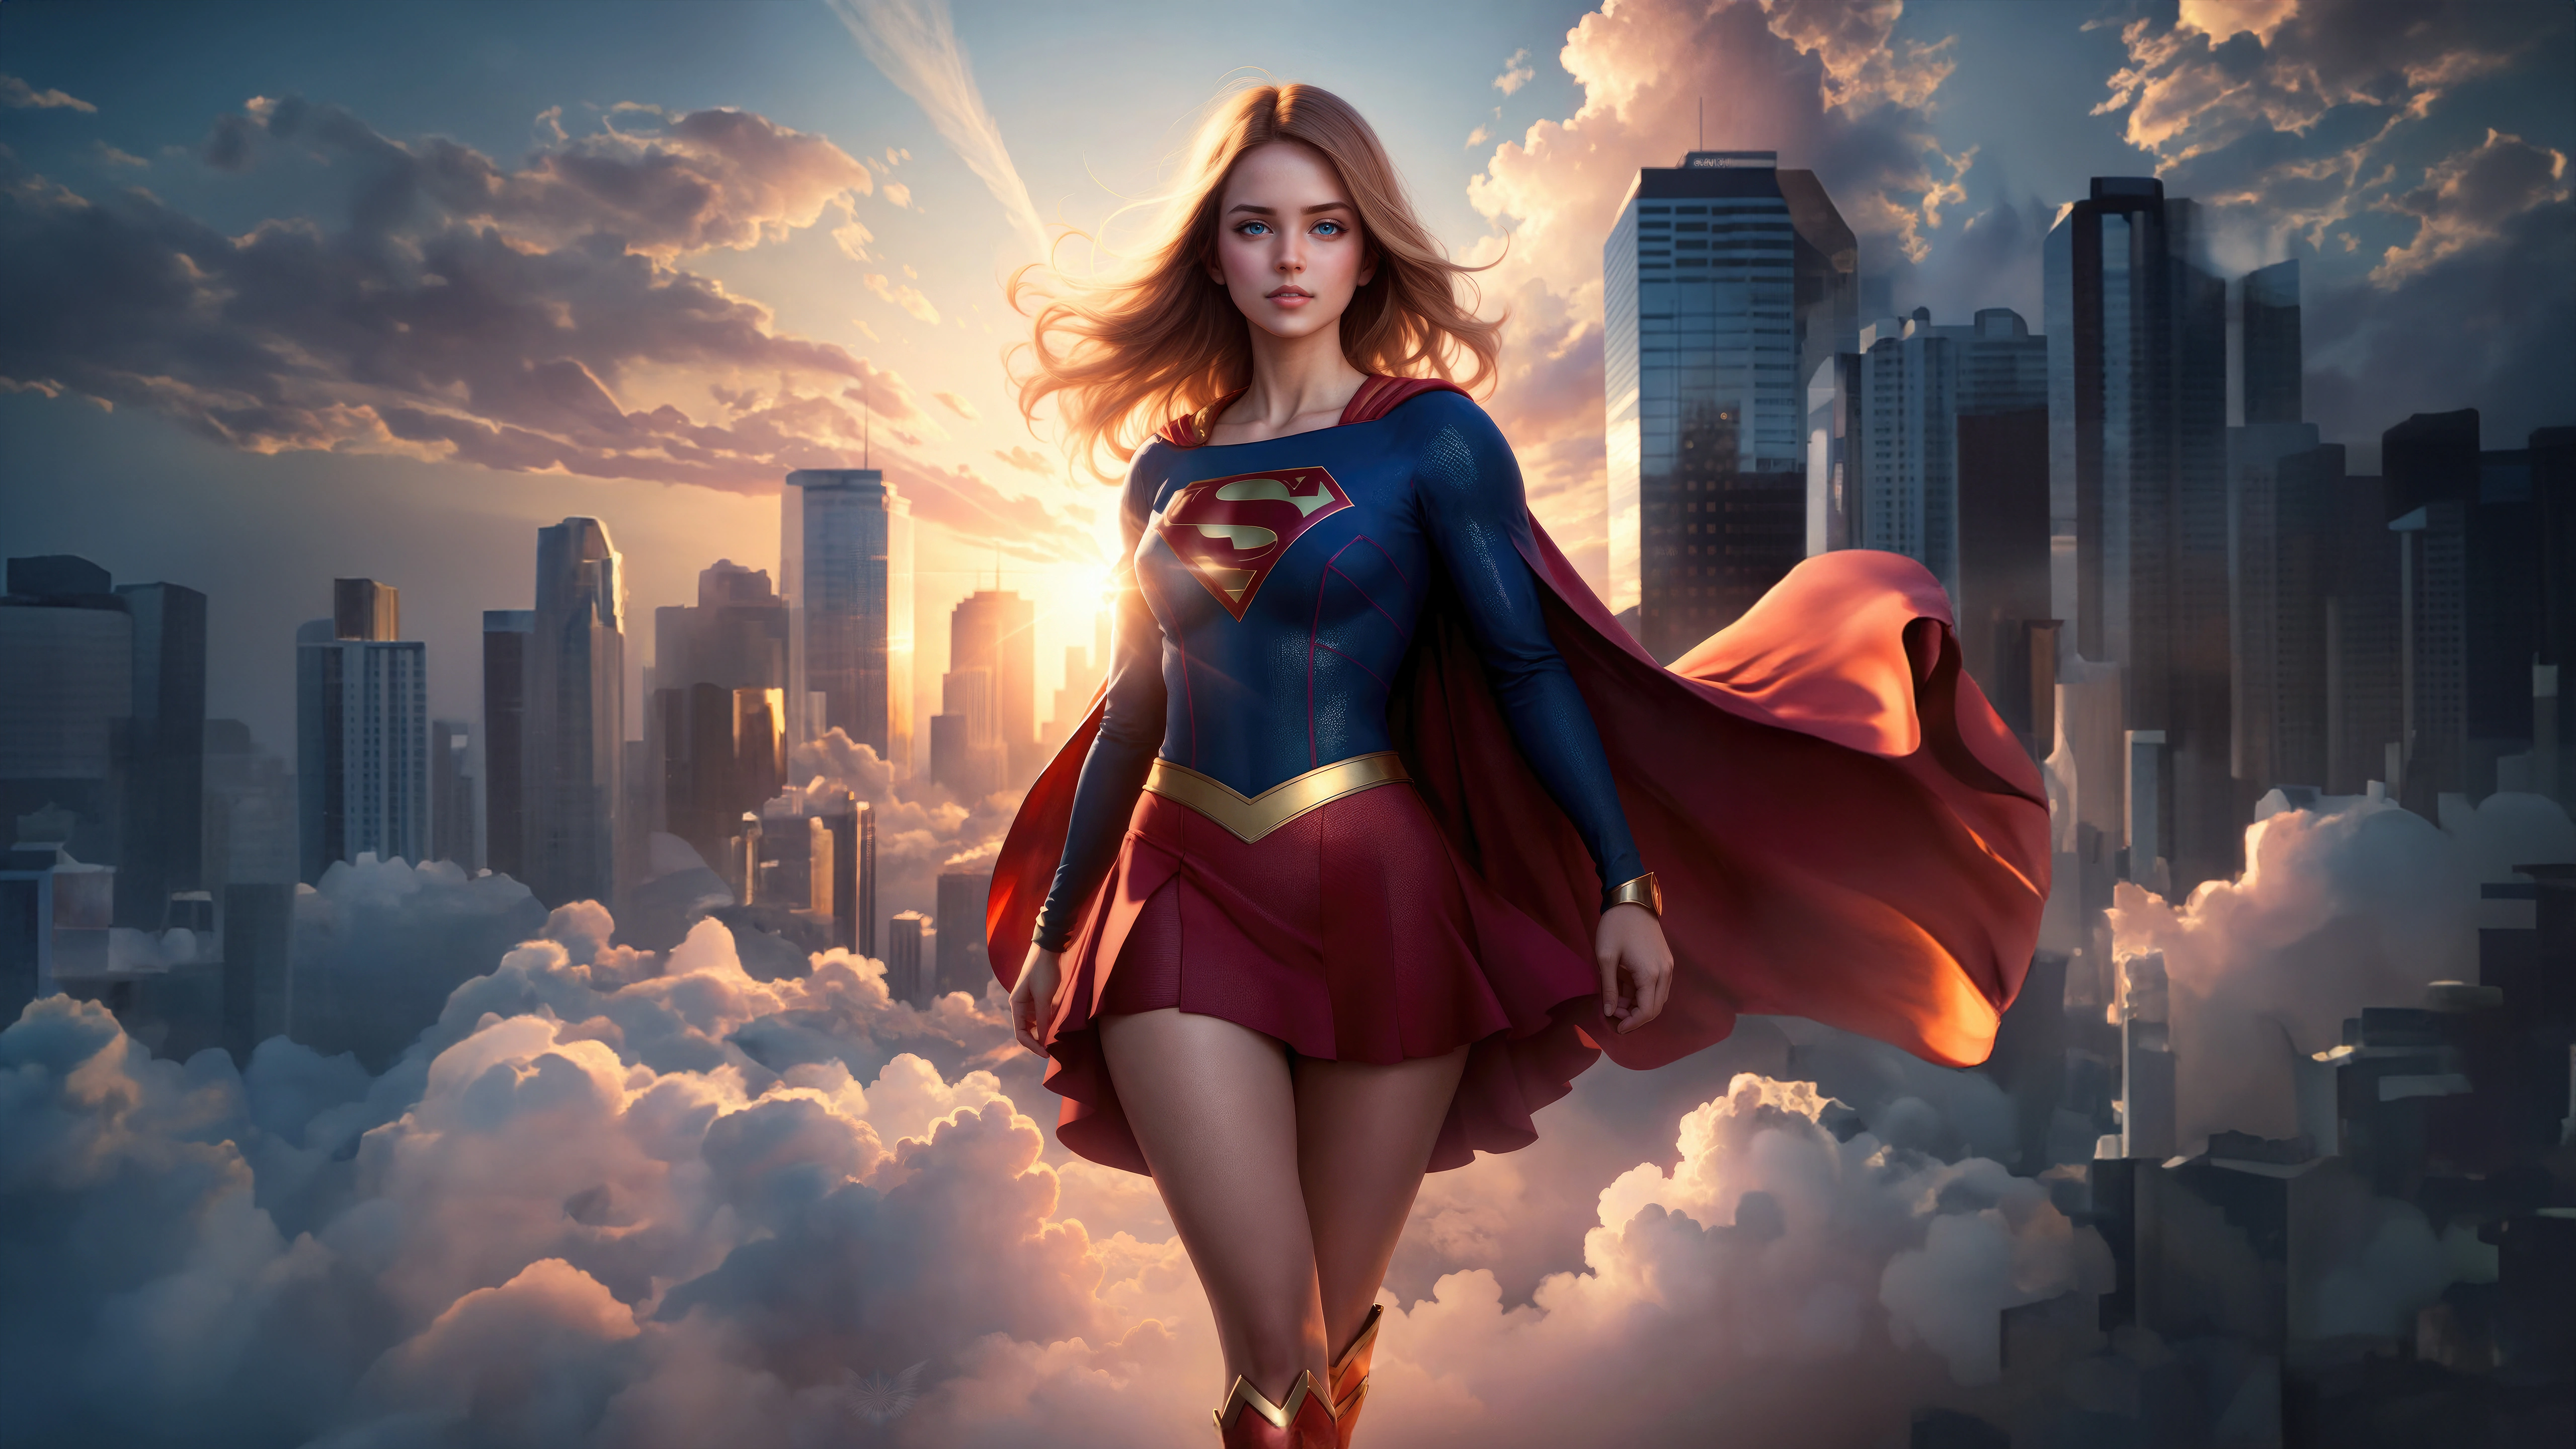 supergirl soars protecting metropolis city vv.jpg